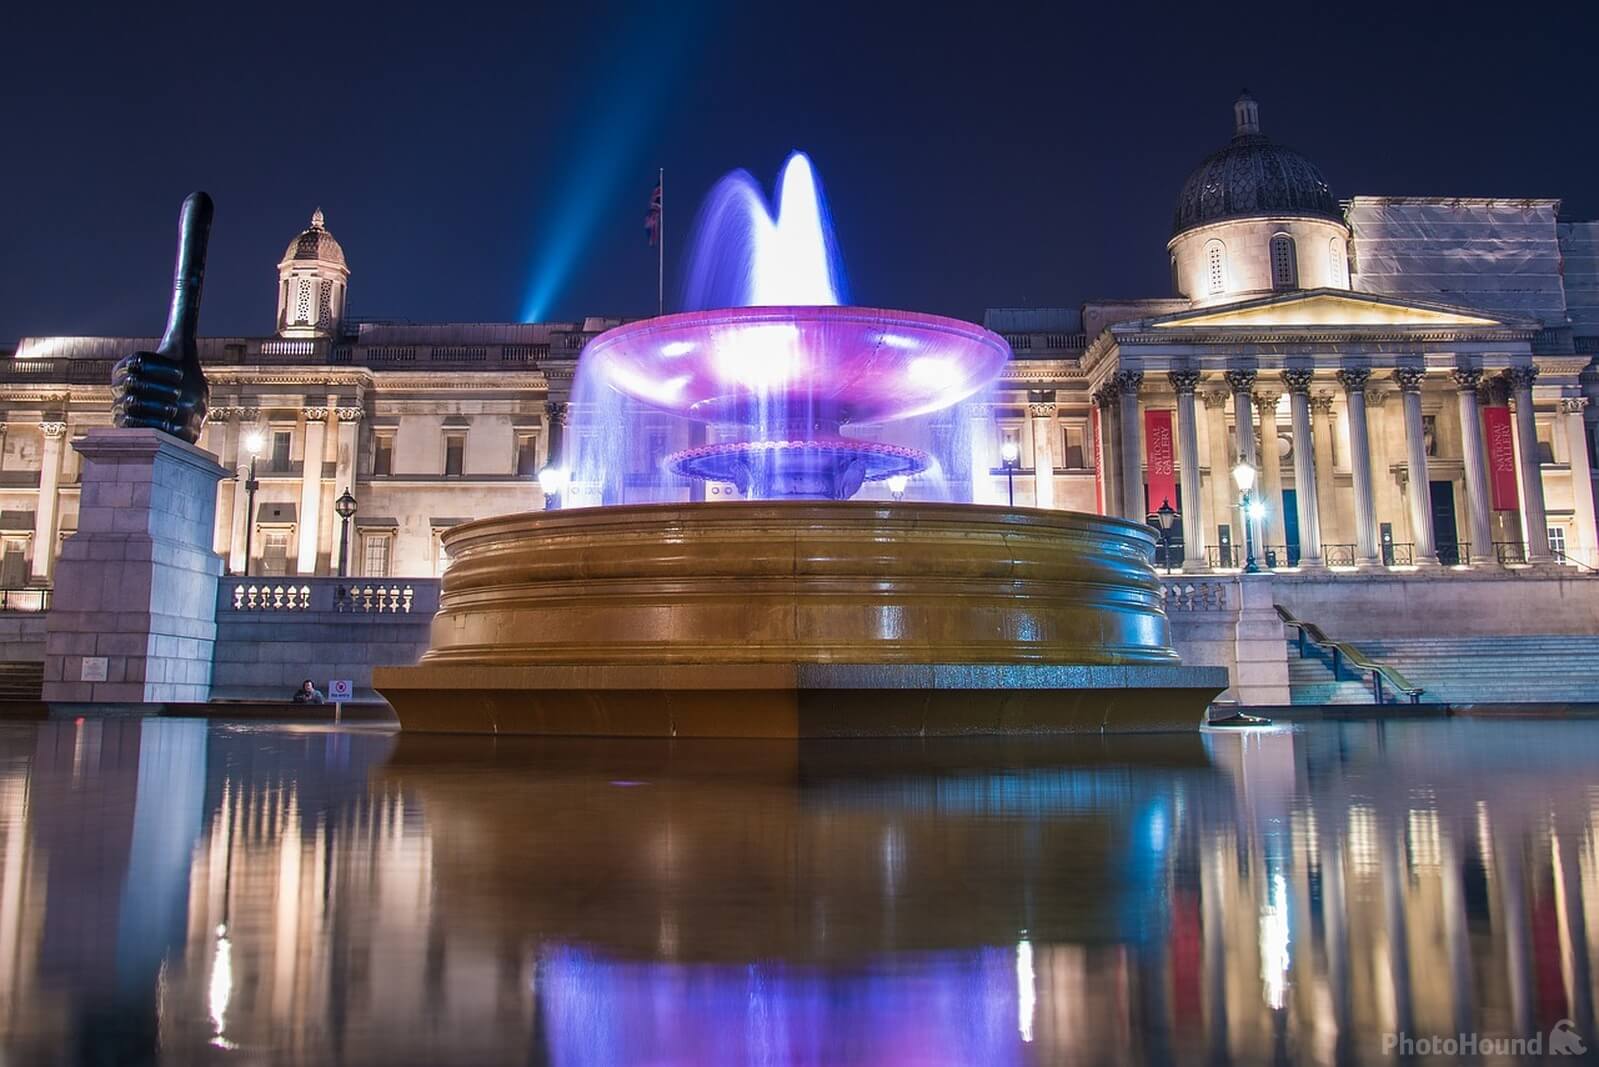 Image of Trafalgar Square by Team PhotoHound